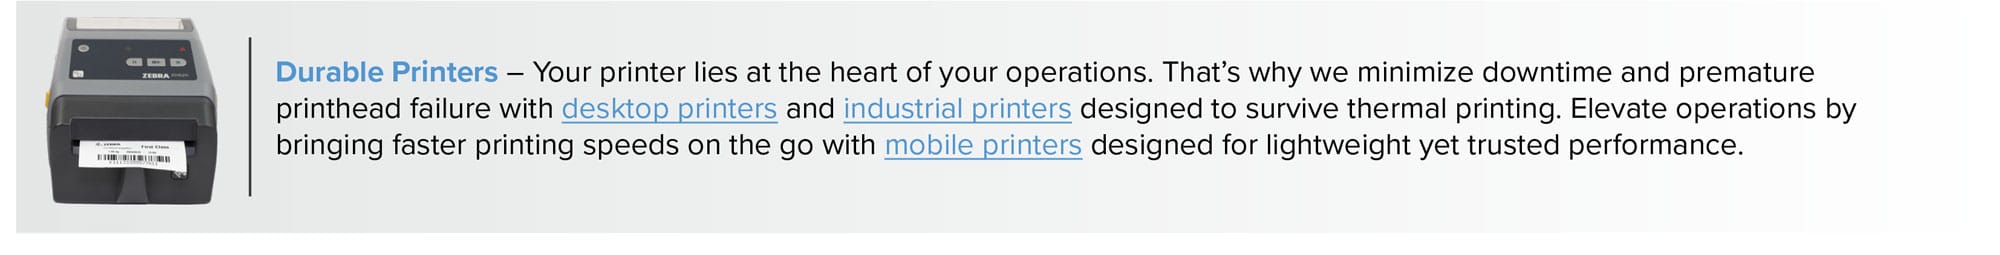 Durable Printers